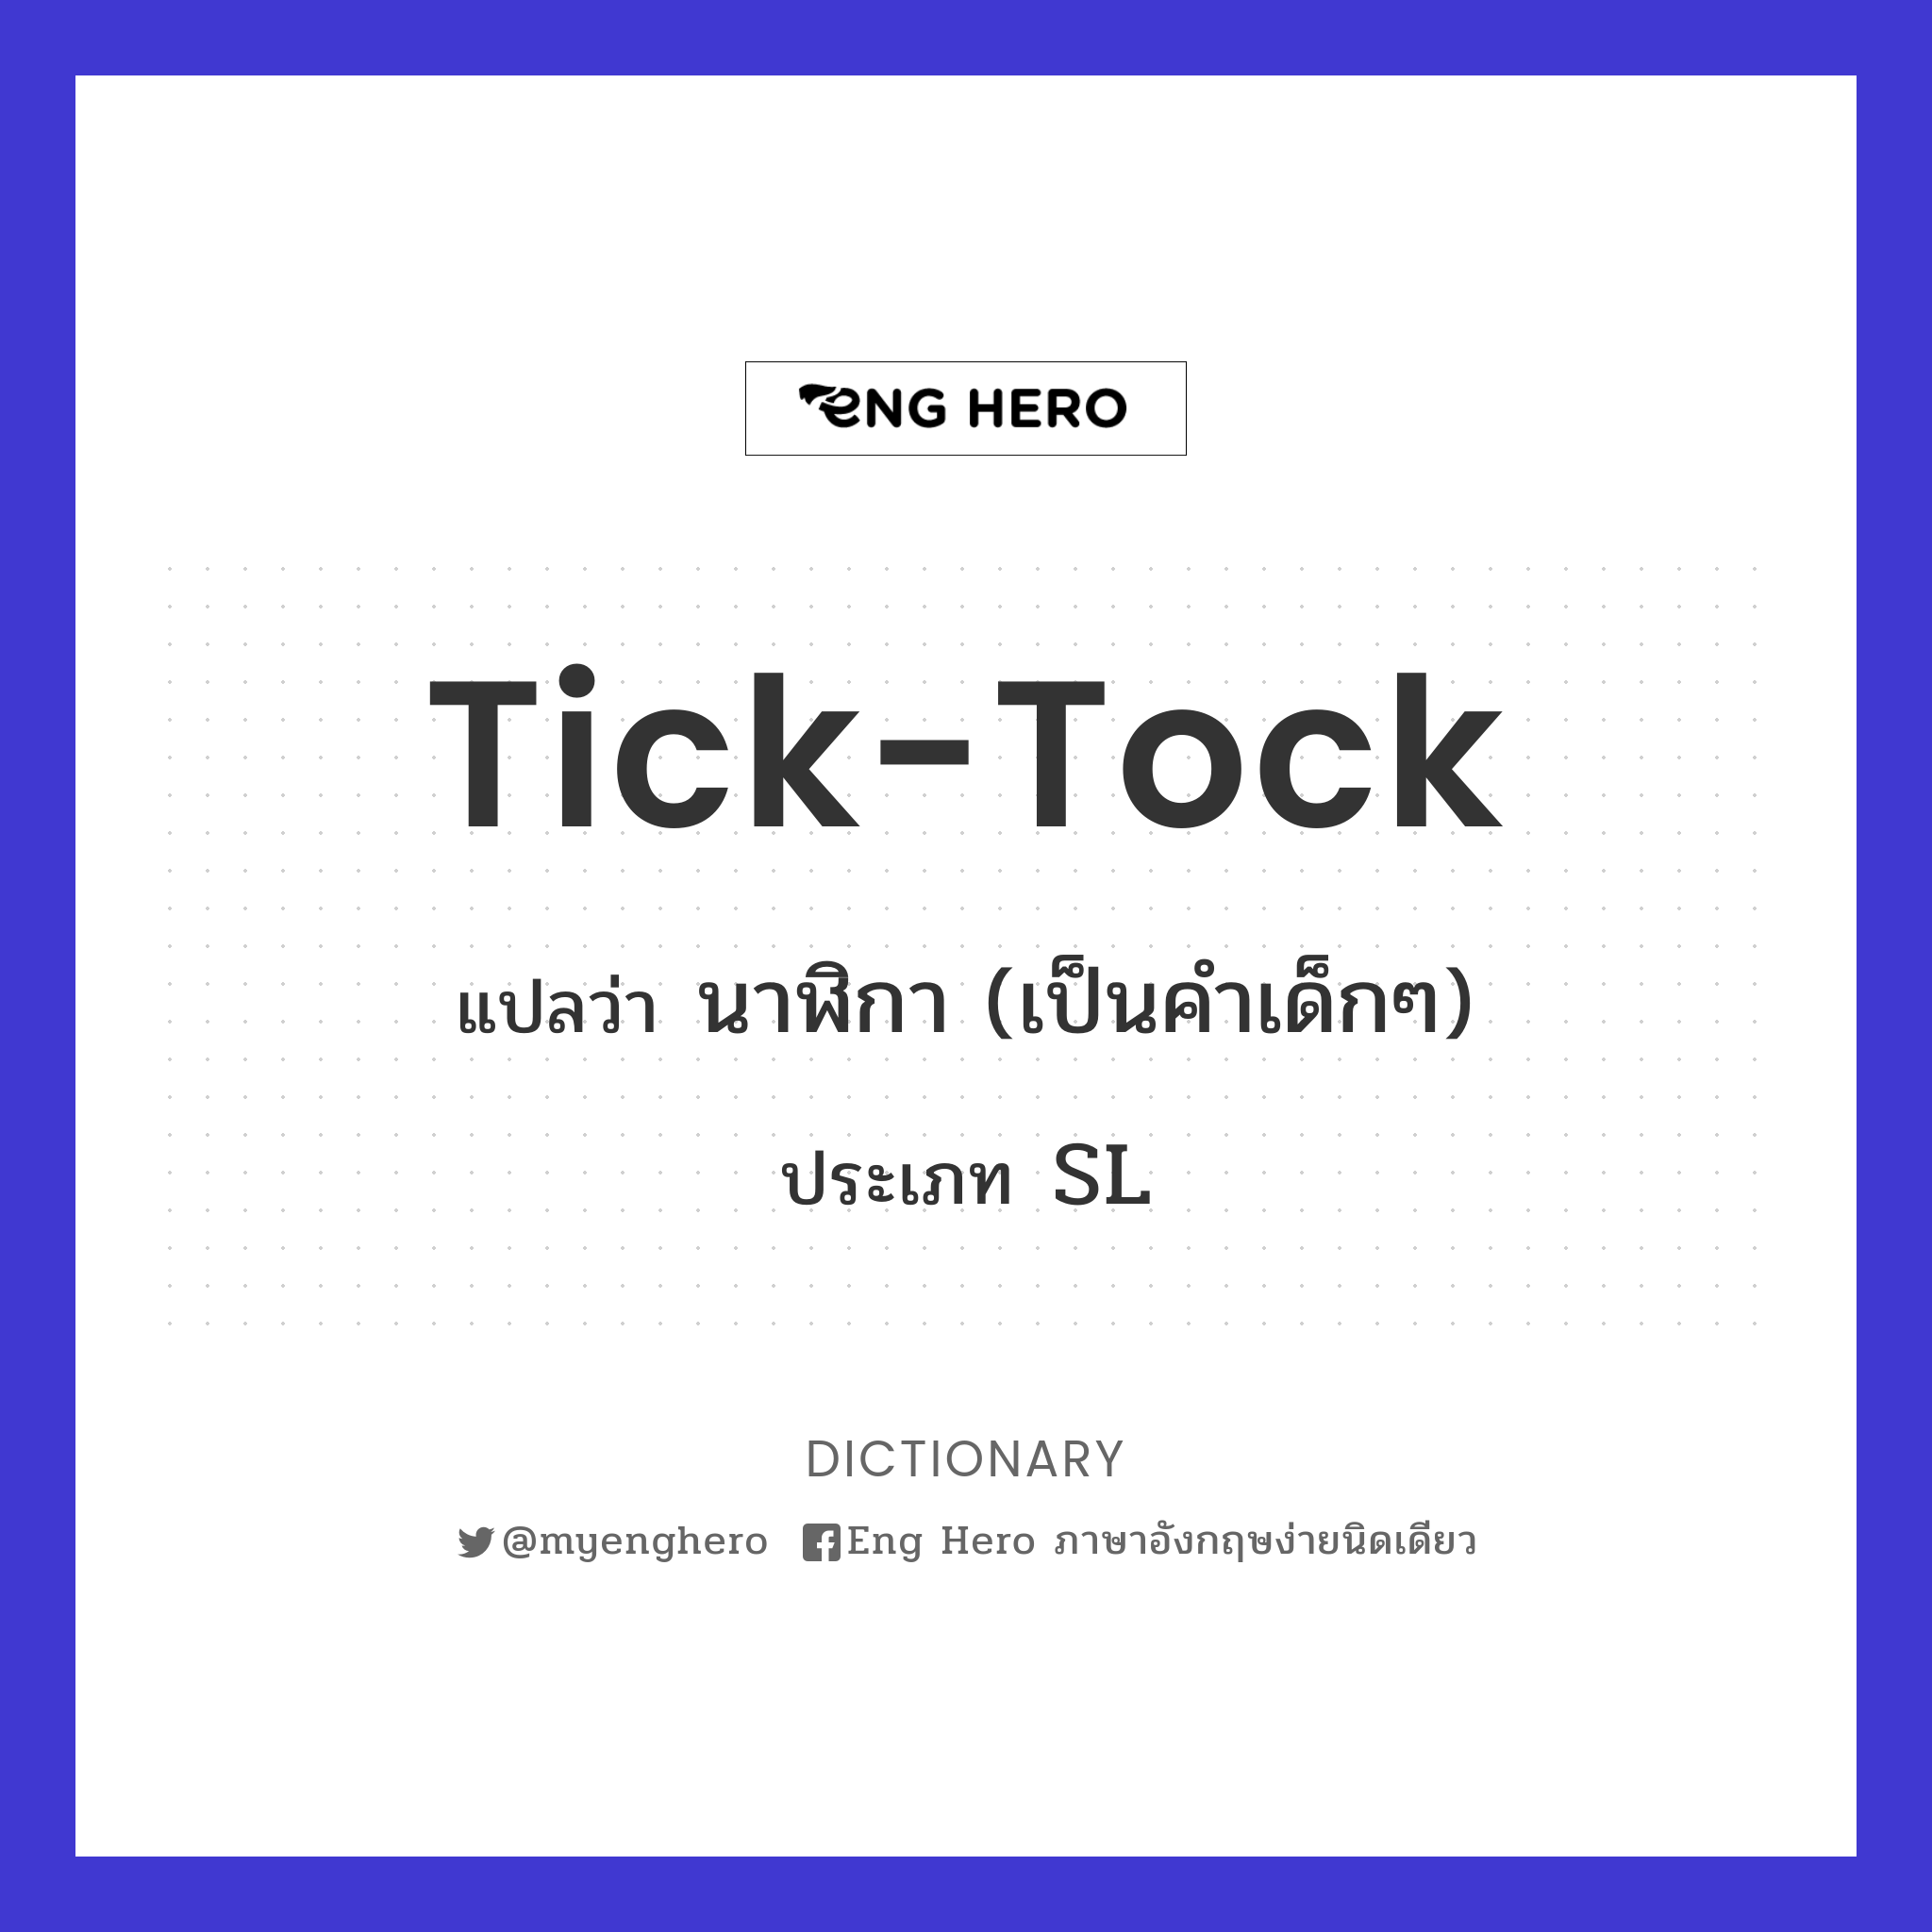 tick-tock